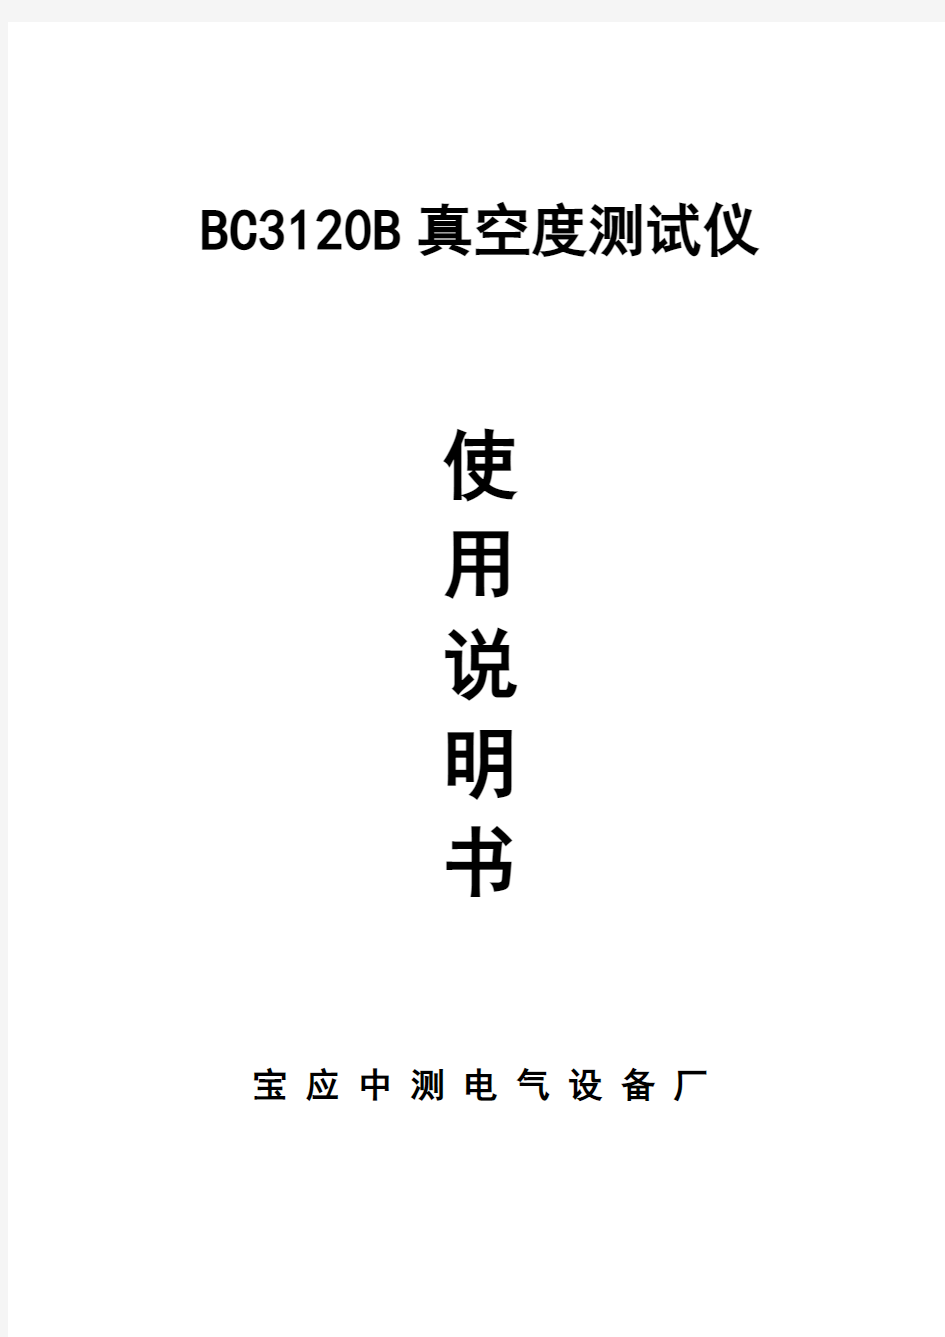 BC3120B真空度测试仪.doc